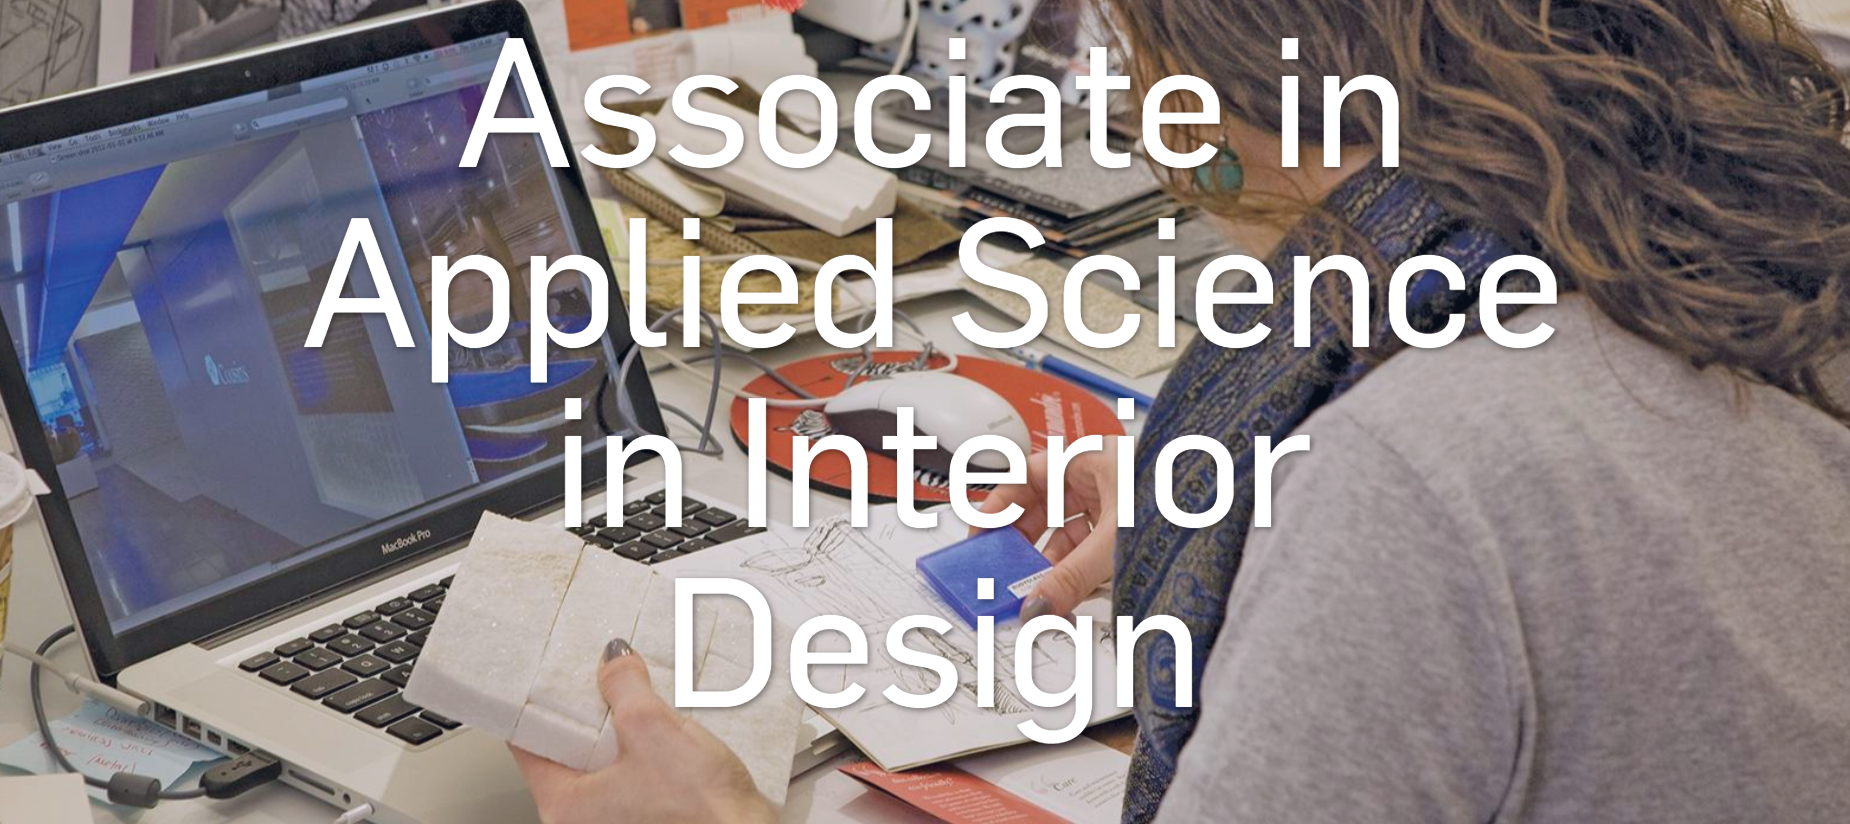 Associate in Applied Science in Interior Design